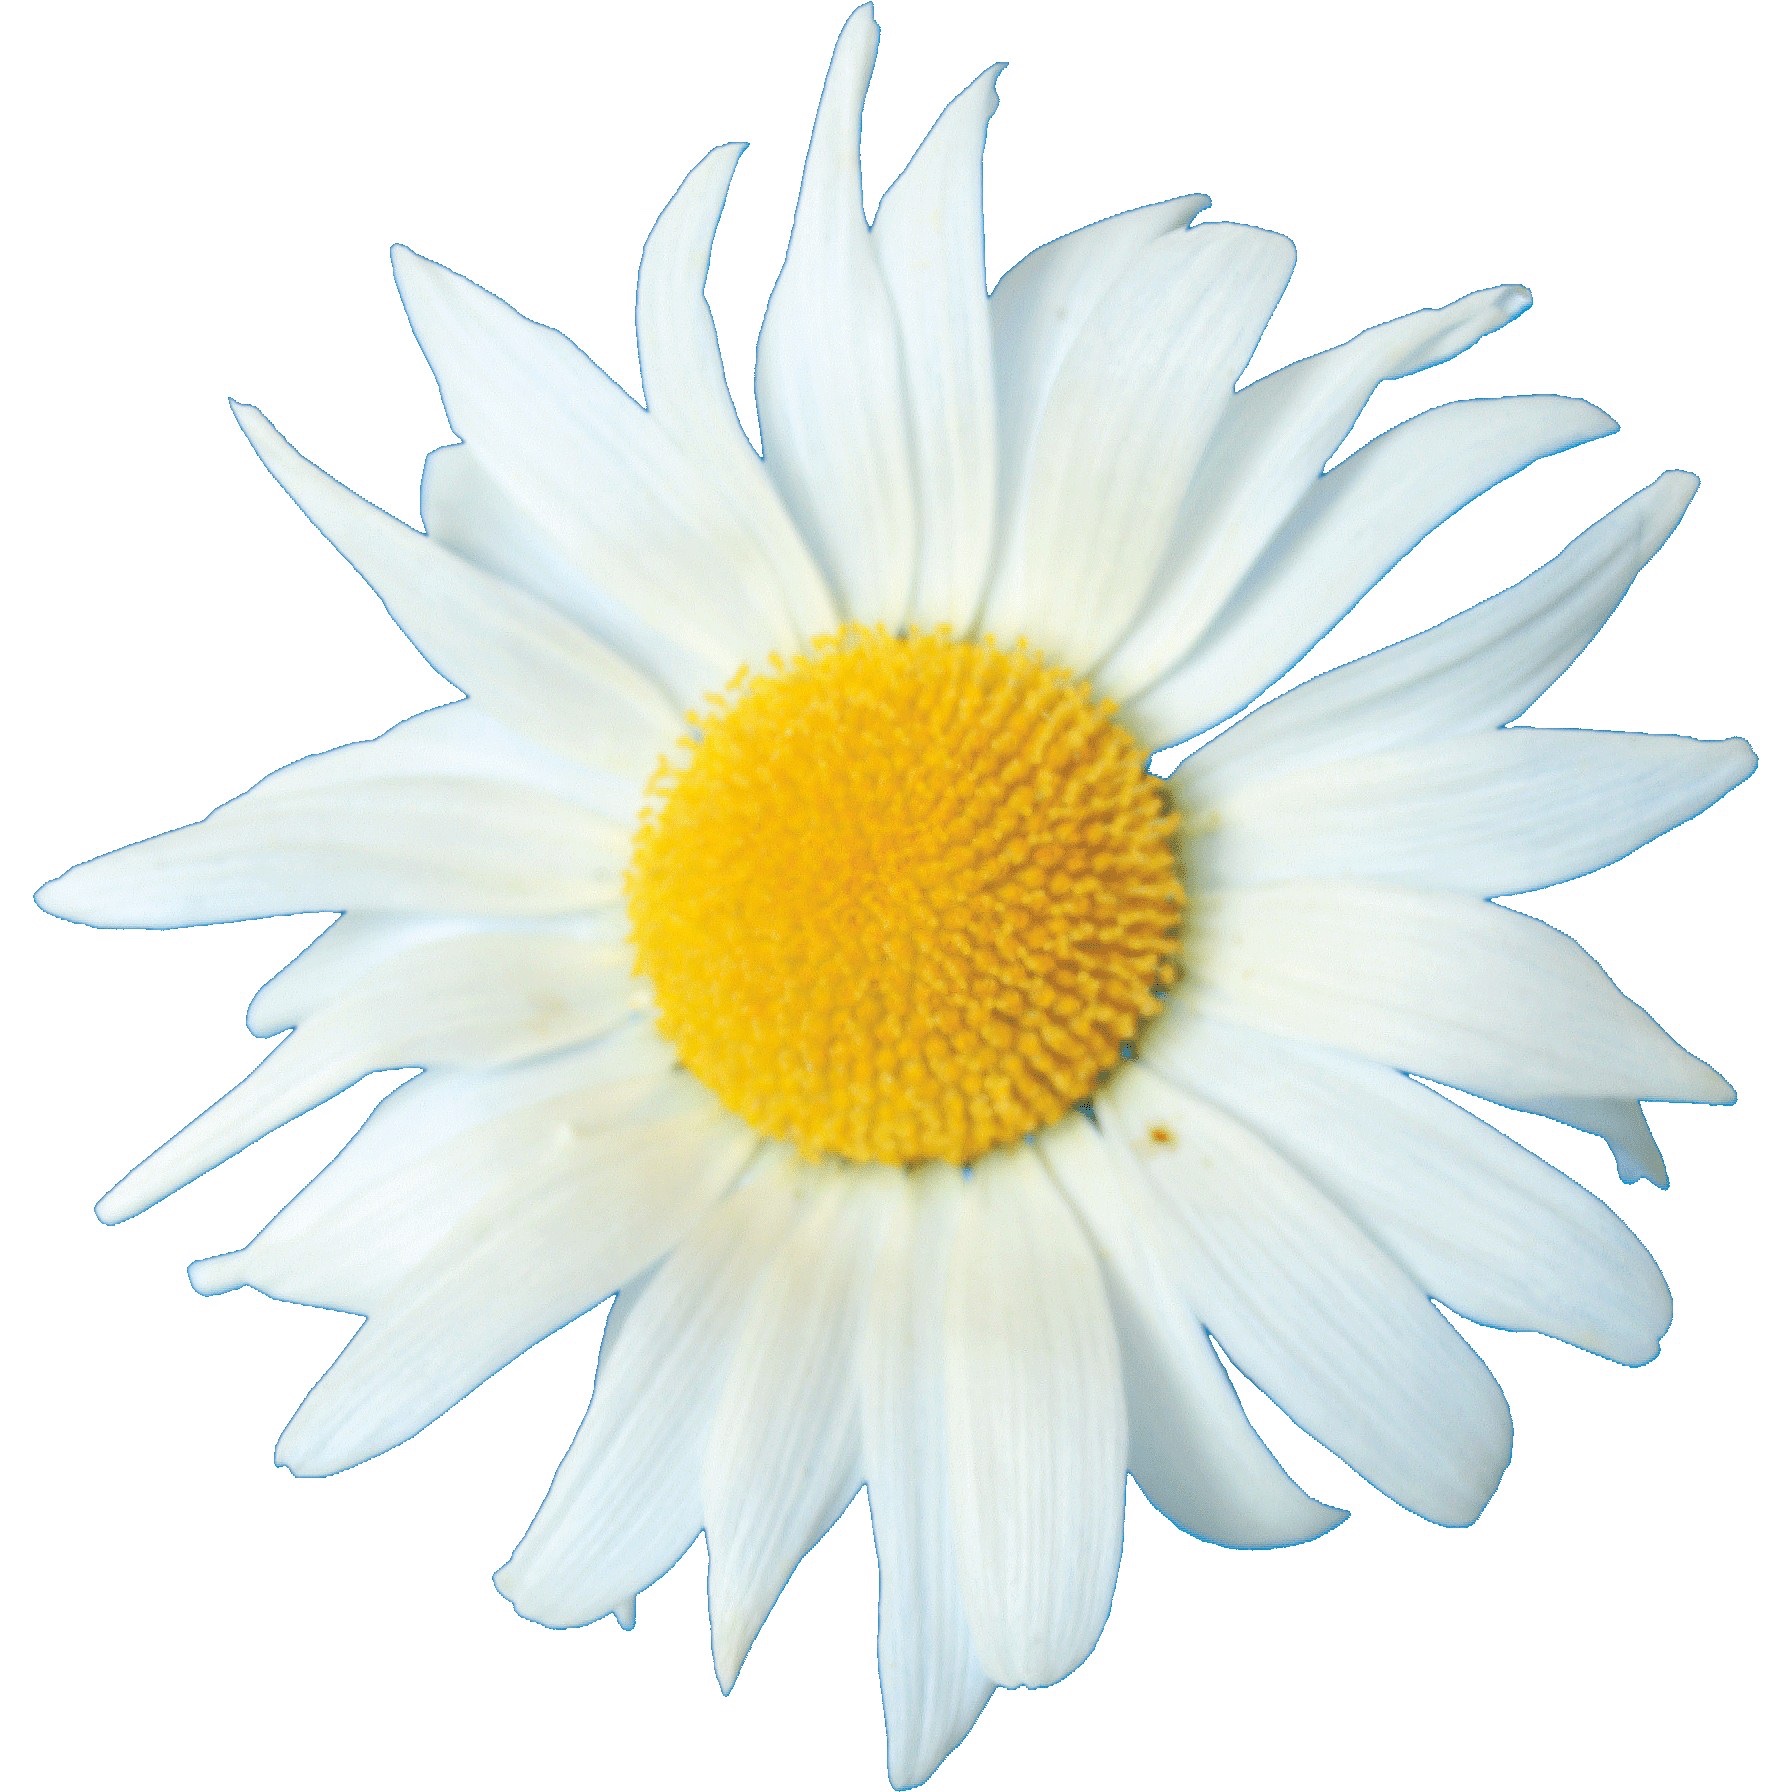 Bildmarke: Margerite (Blume)